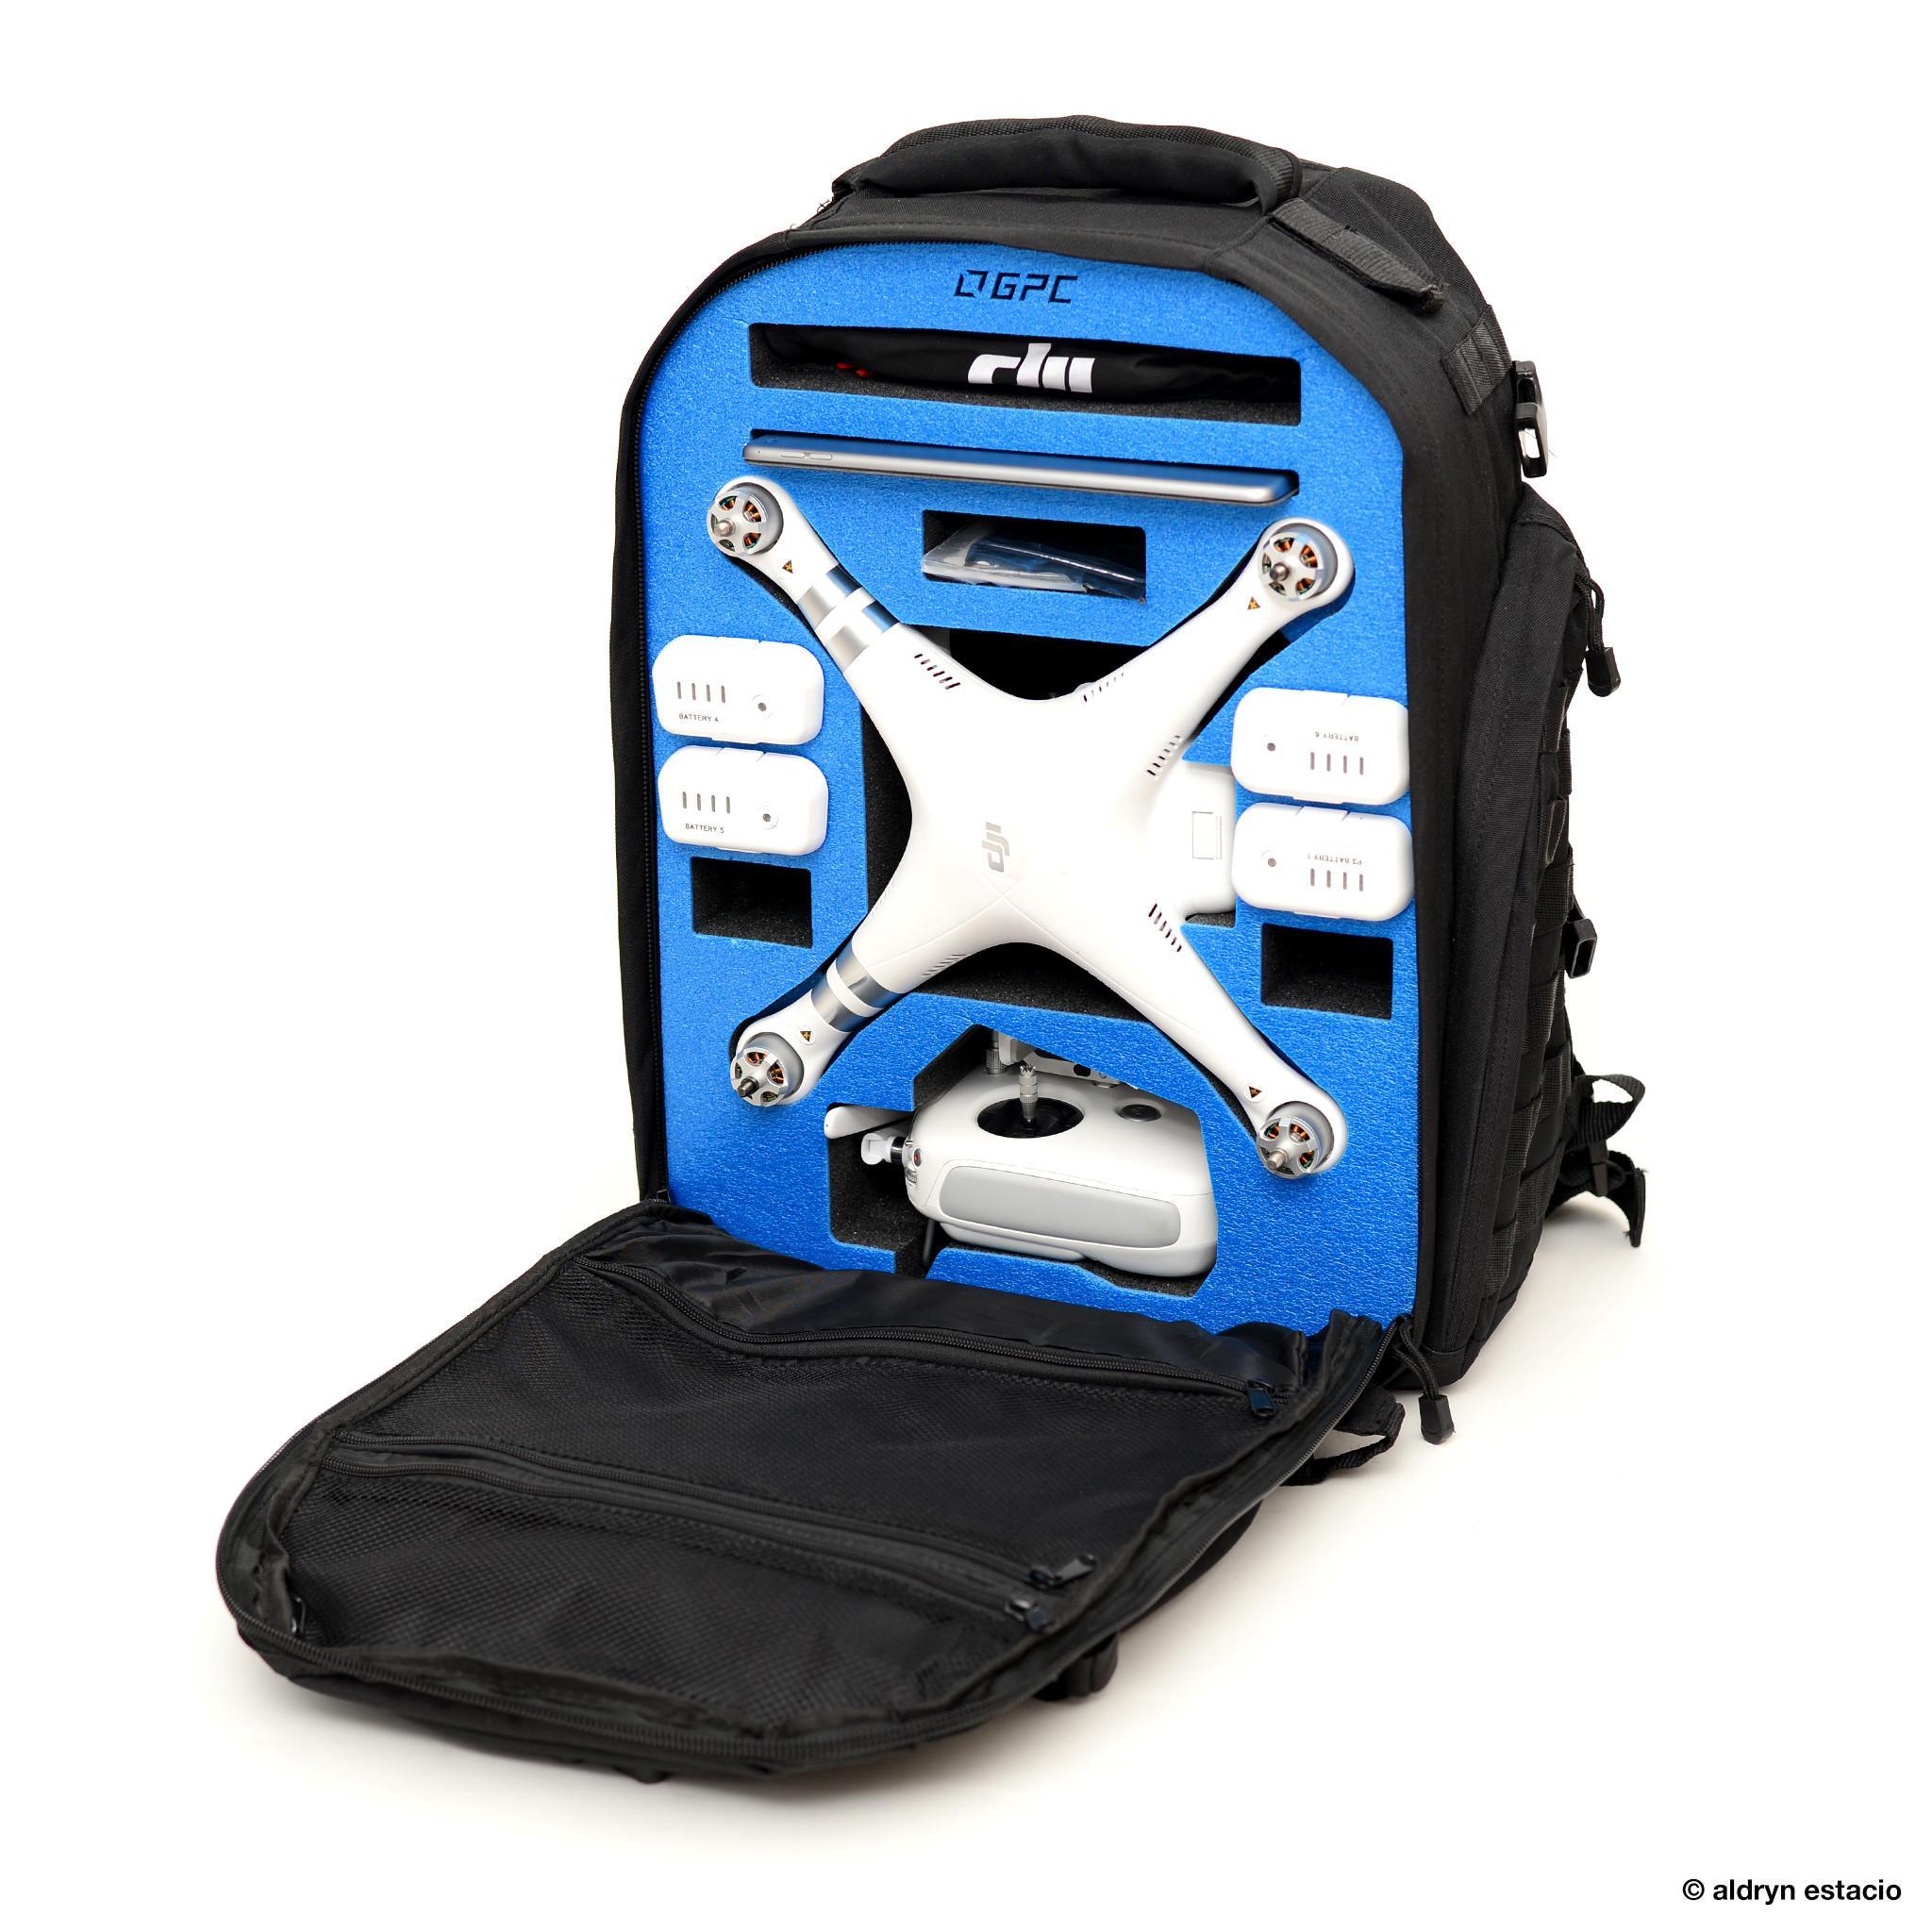 Go Professional Case Standard Backpack for DJI Phantom 3 Professional